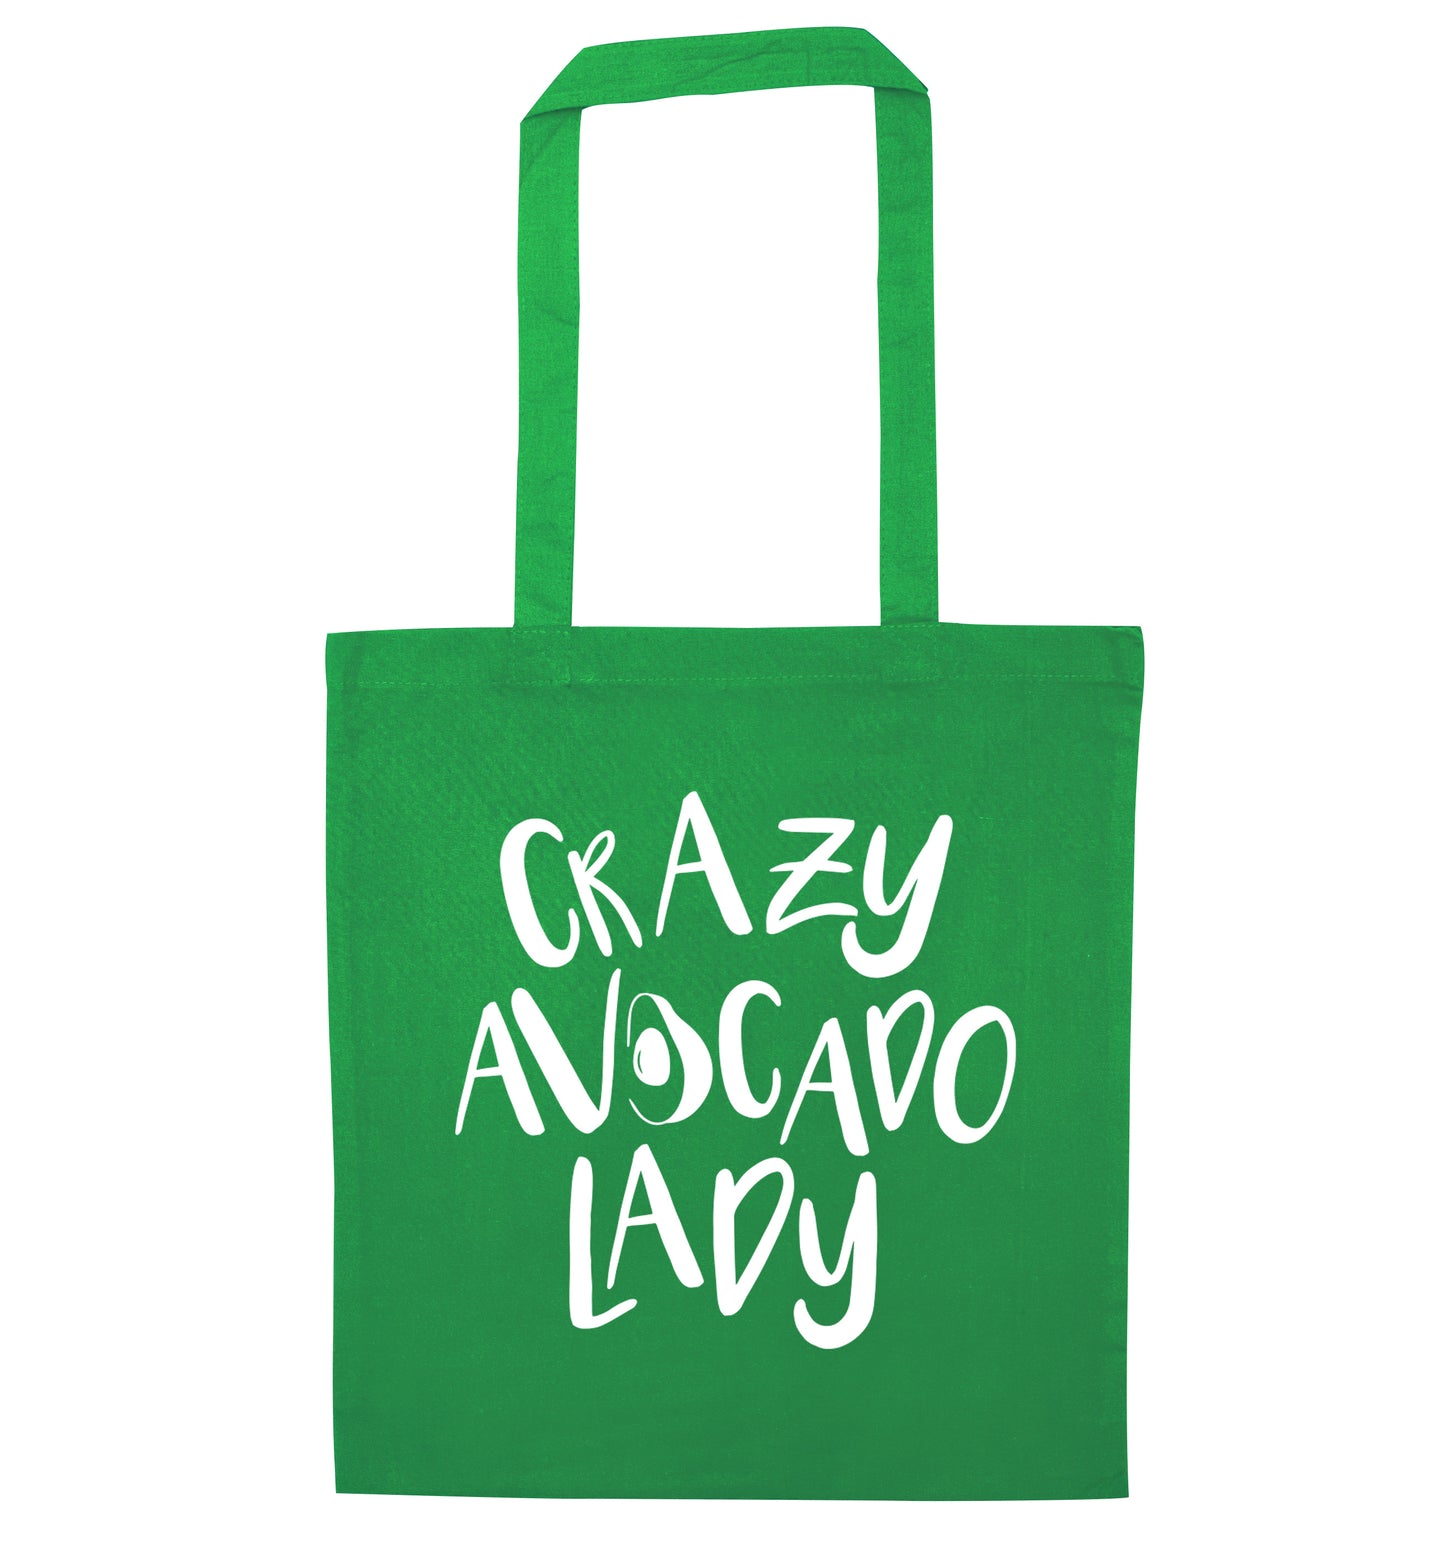 Crazy avocado lady green tote bag